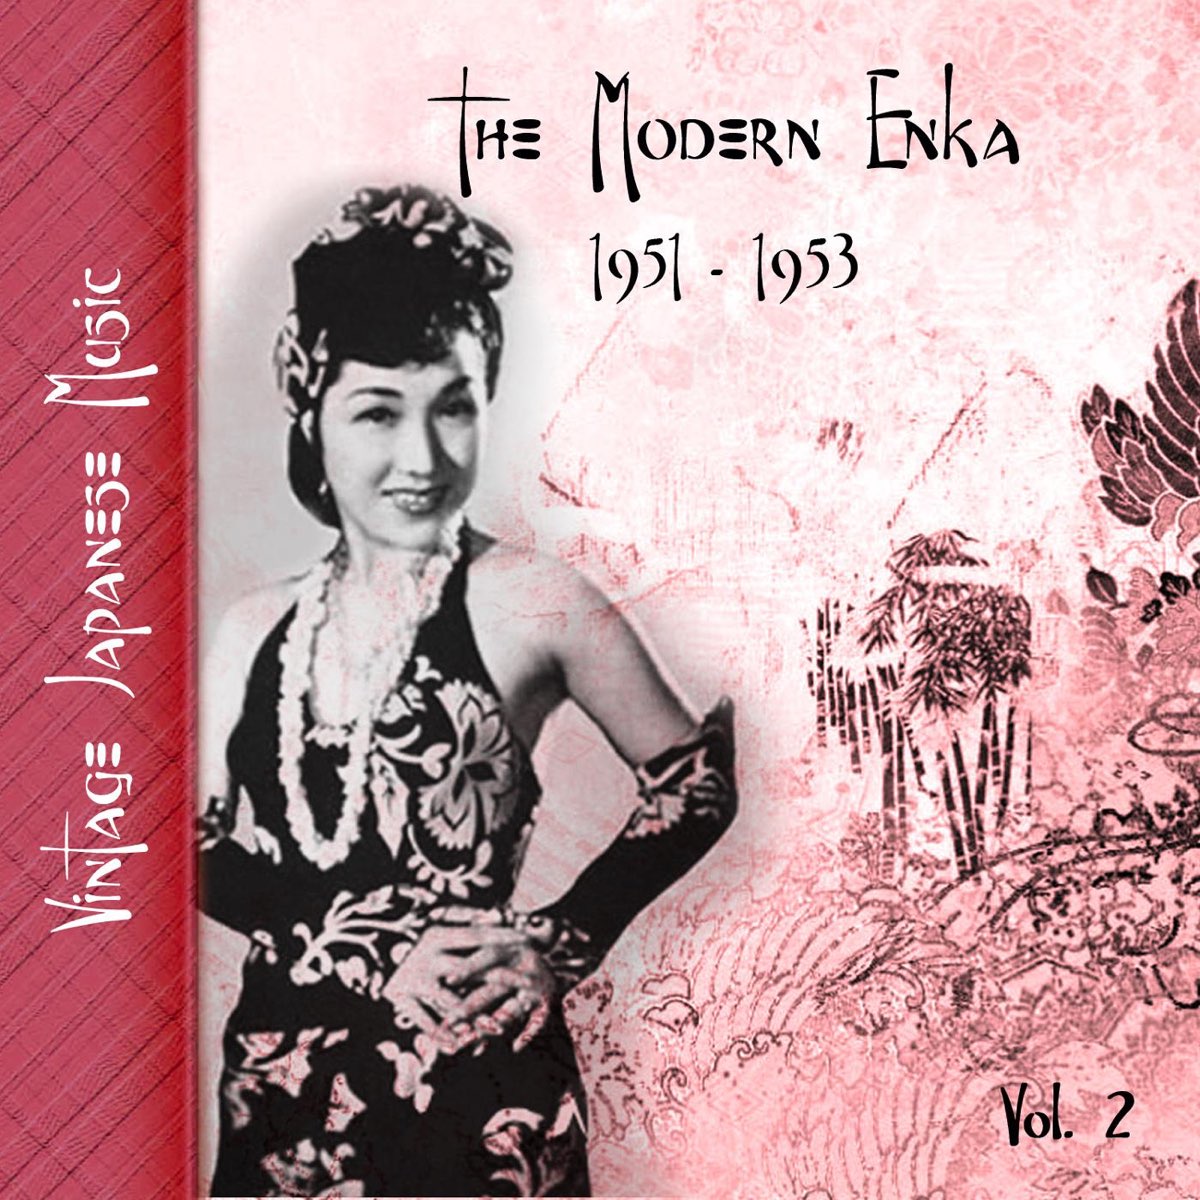 Идзу певица обложка. 196x - Kimura Yoshio no Guitar Enka обложка альбома. 1951 1953